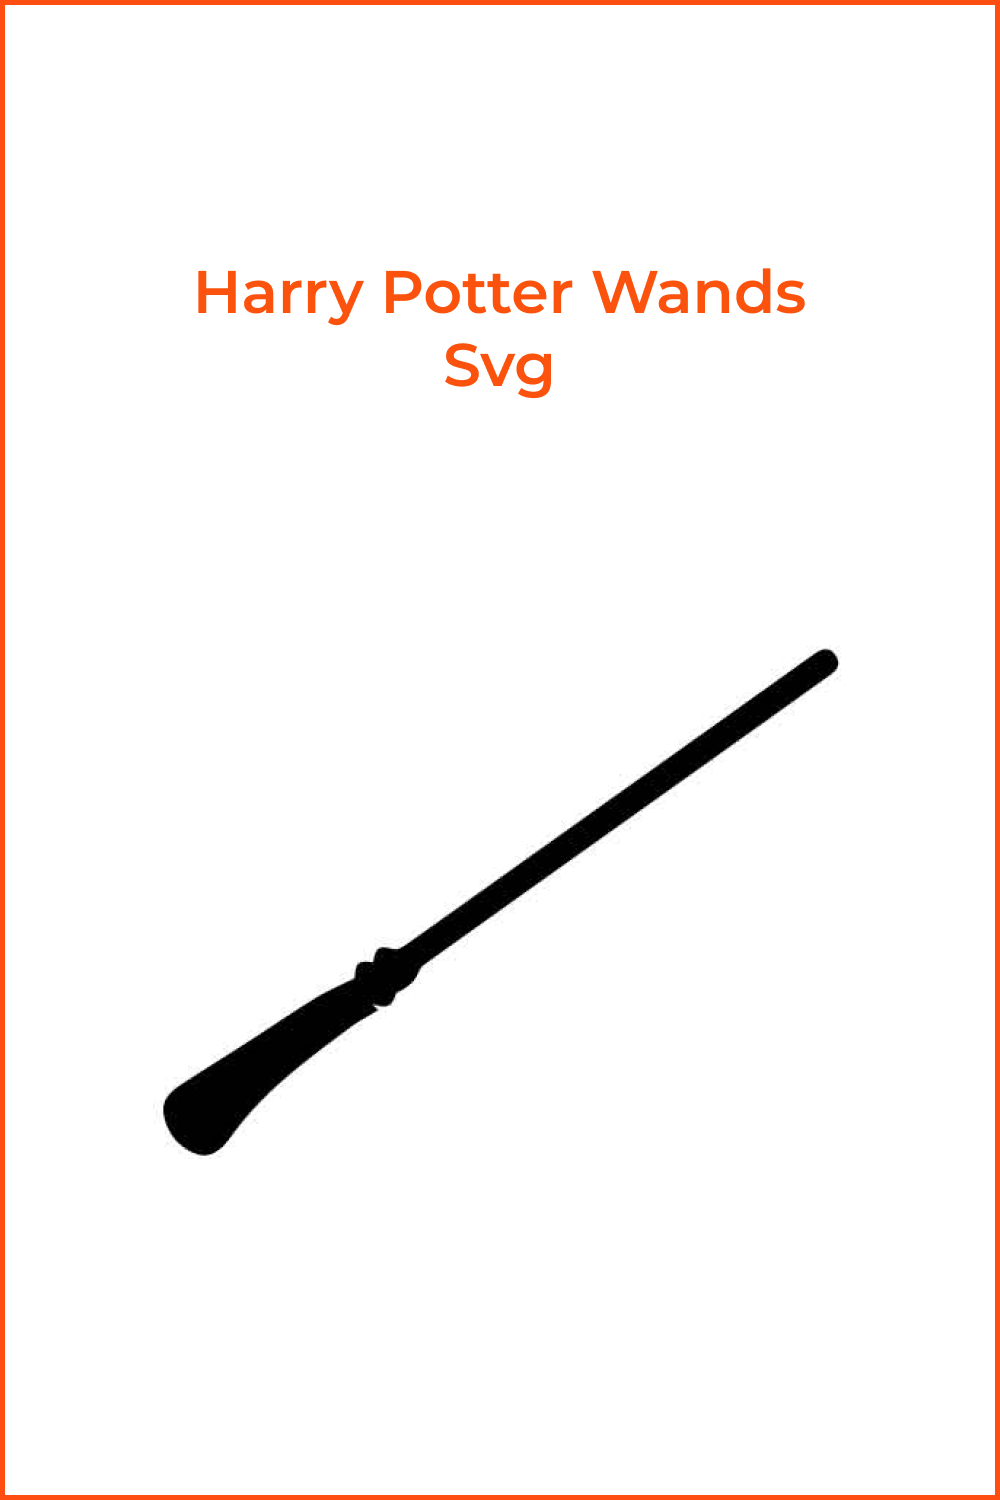 Harry Potter Magic wand image.